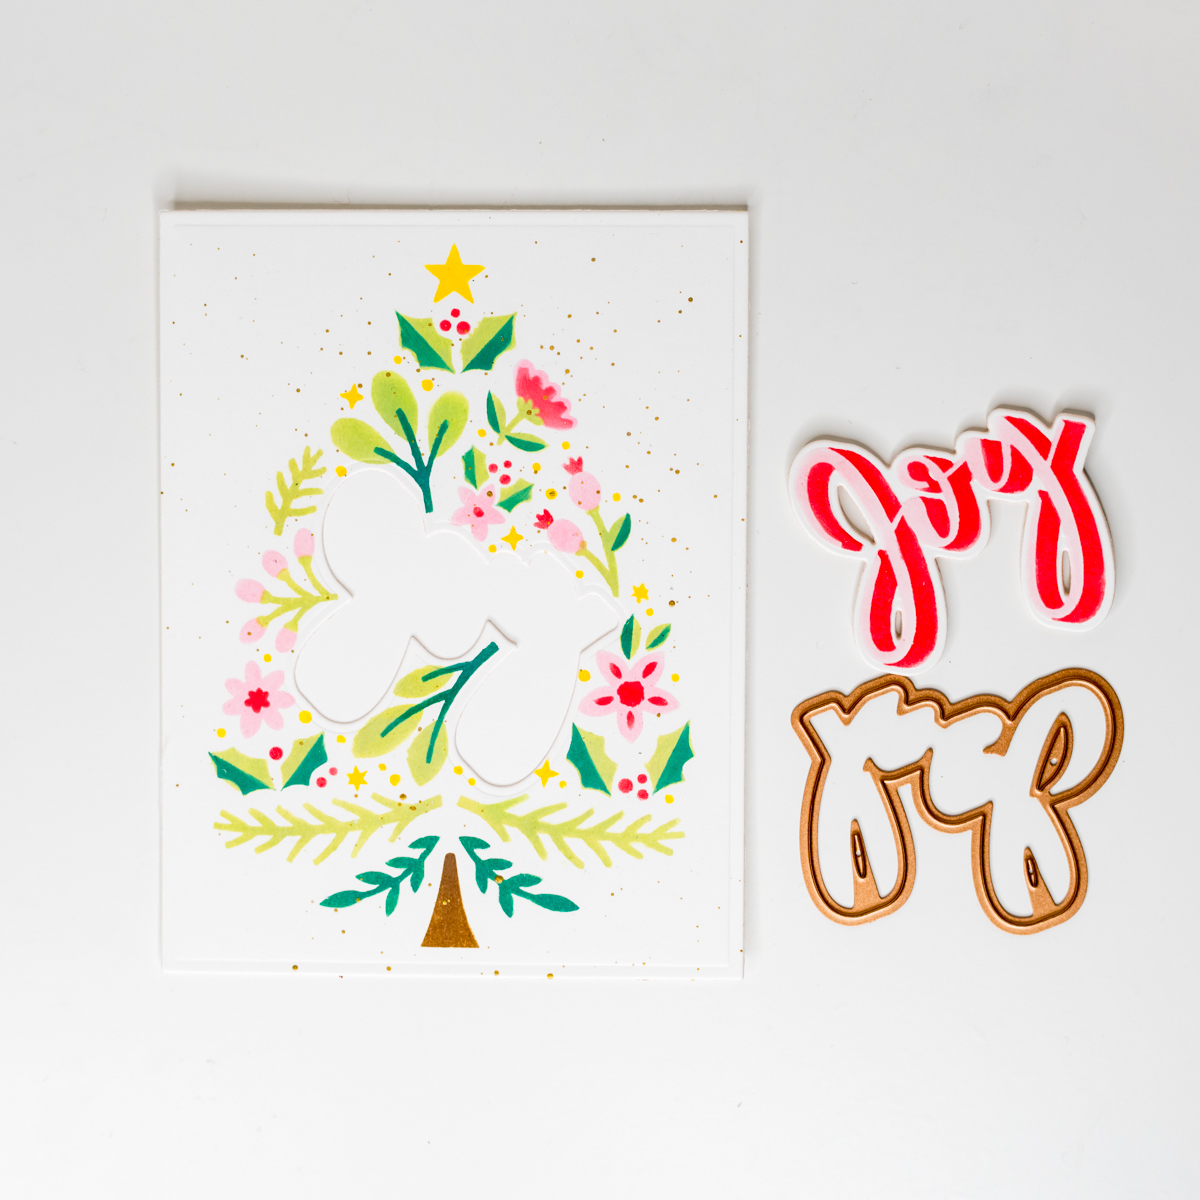 Spellbinders Stencils from The Layered Christmas Stencils-Joy Tree